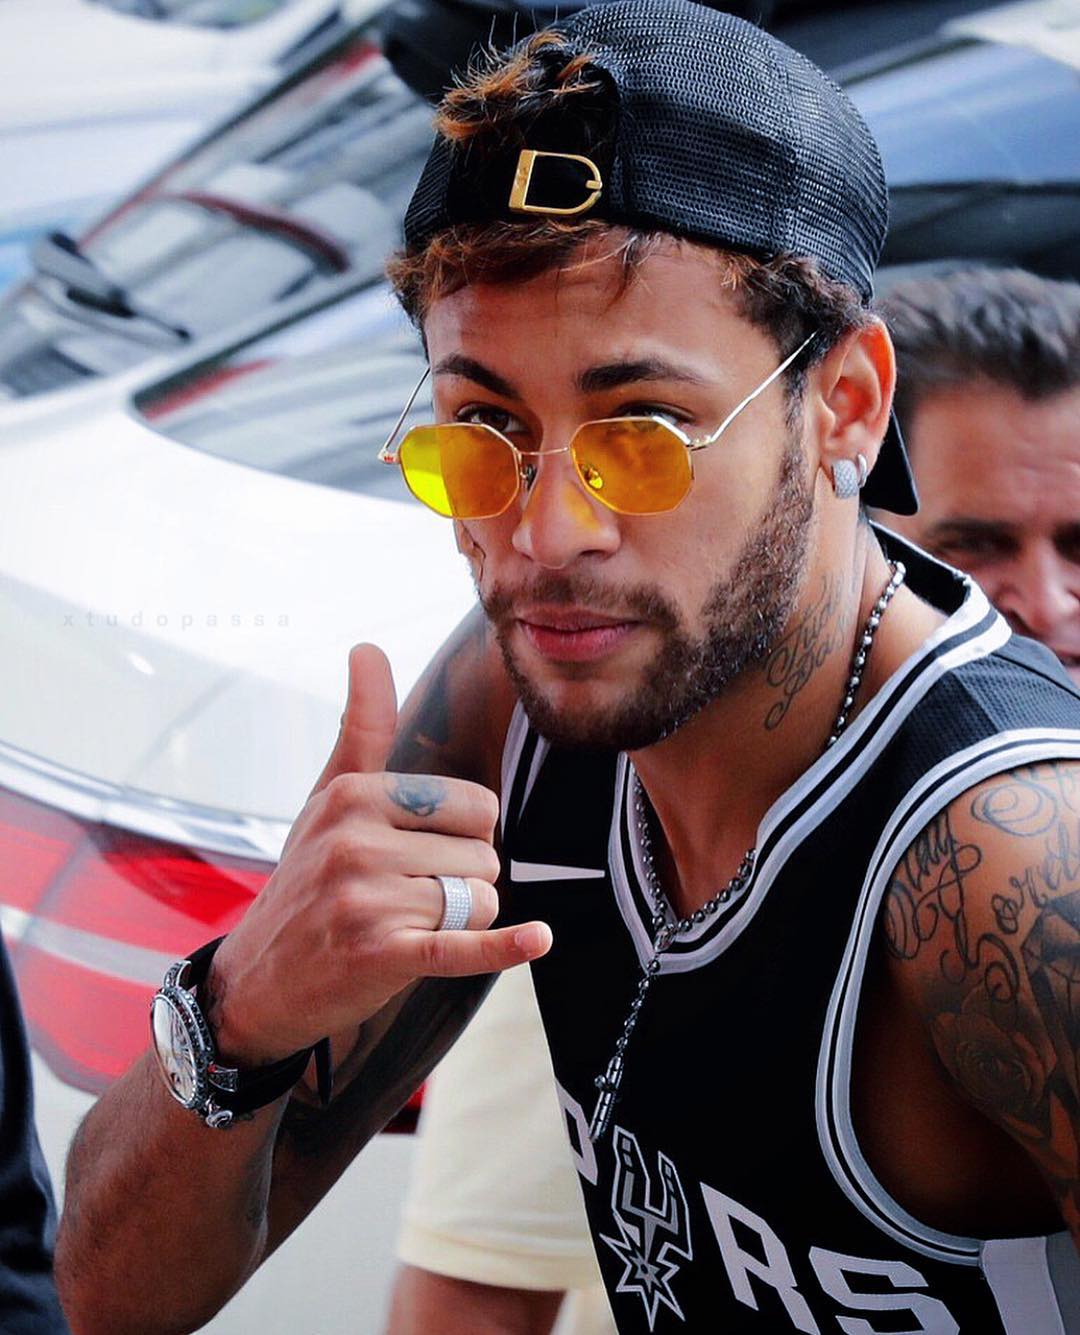 Brinco do Neymar